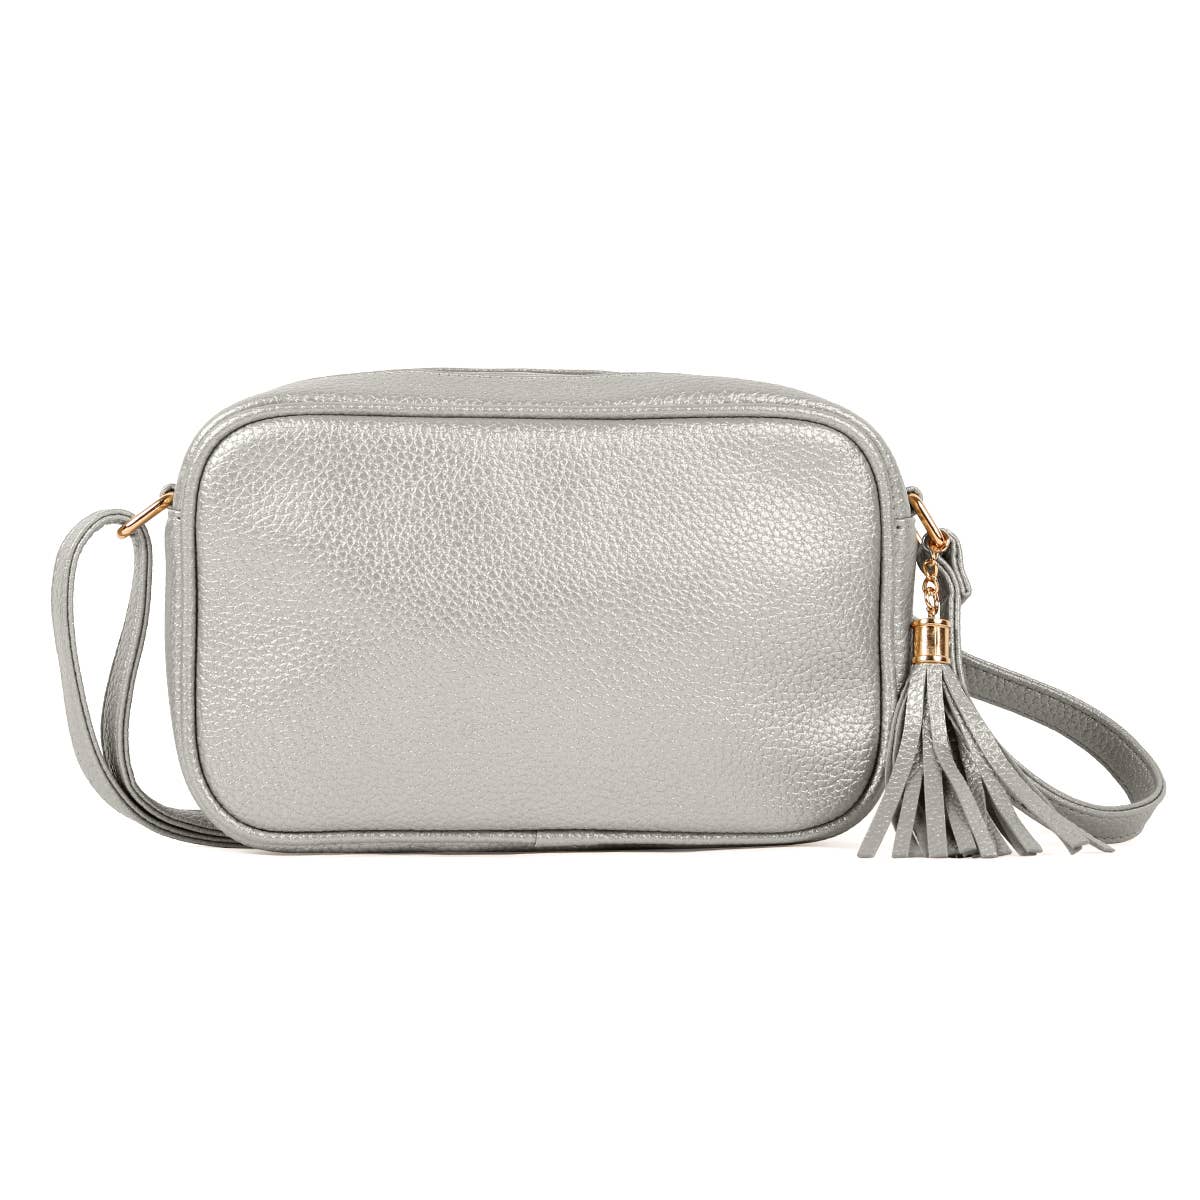 Silver Crossbody Bag with Tassel